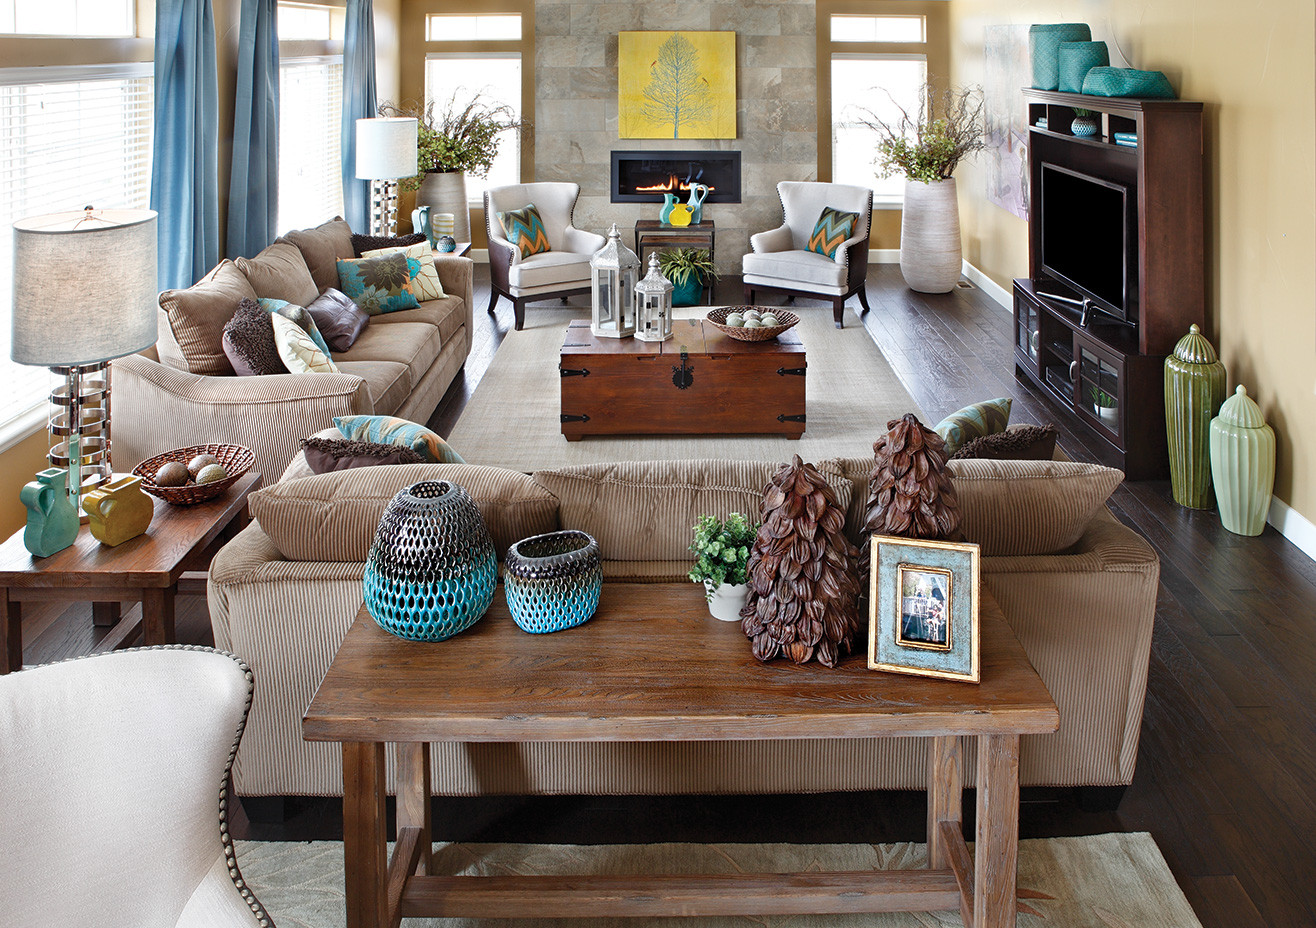 Living Room Furniture Arrangement Ideas
 Tips for Updating your Living Room Arrangement